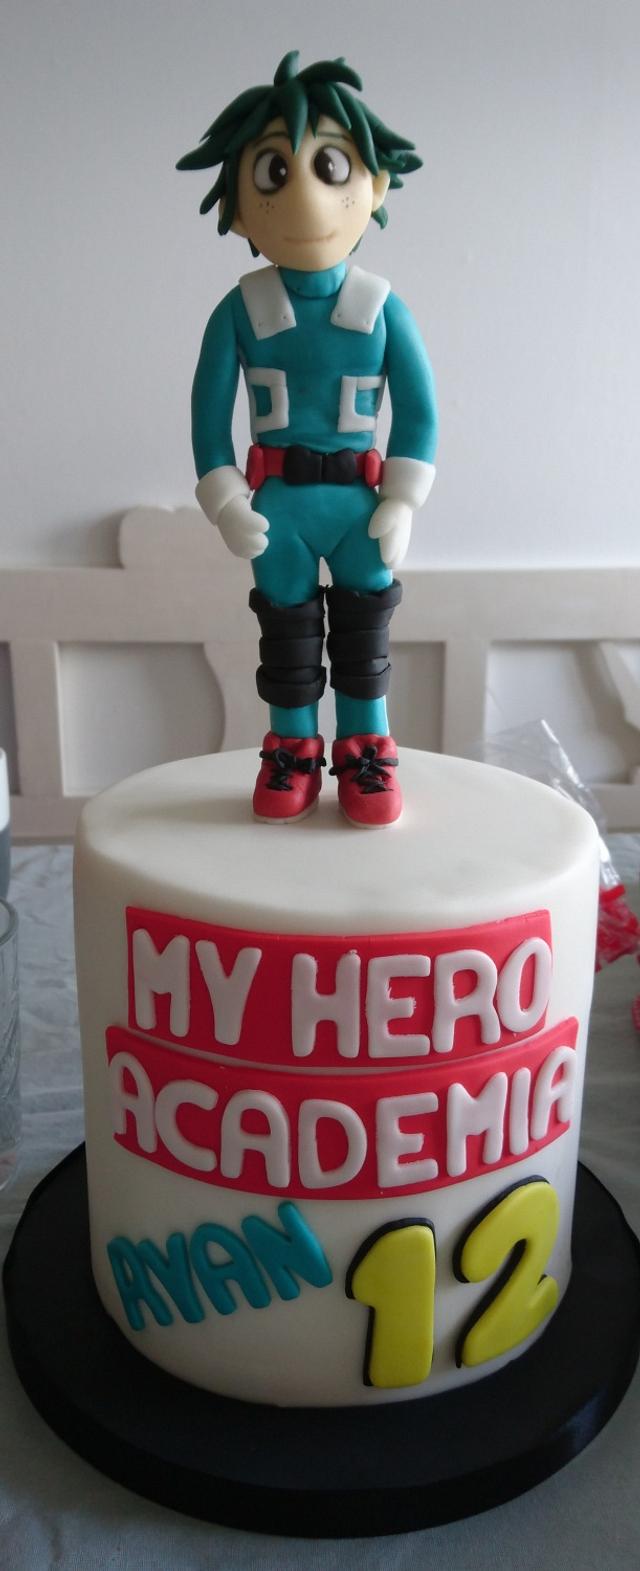 My hero academia - cake by Cakesbymarloes - CakesDecor